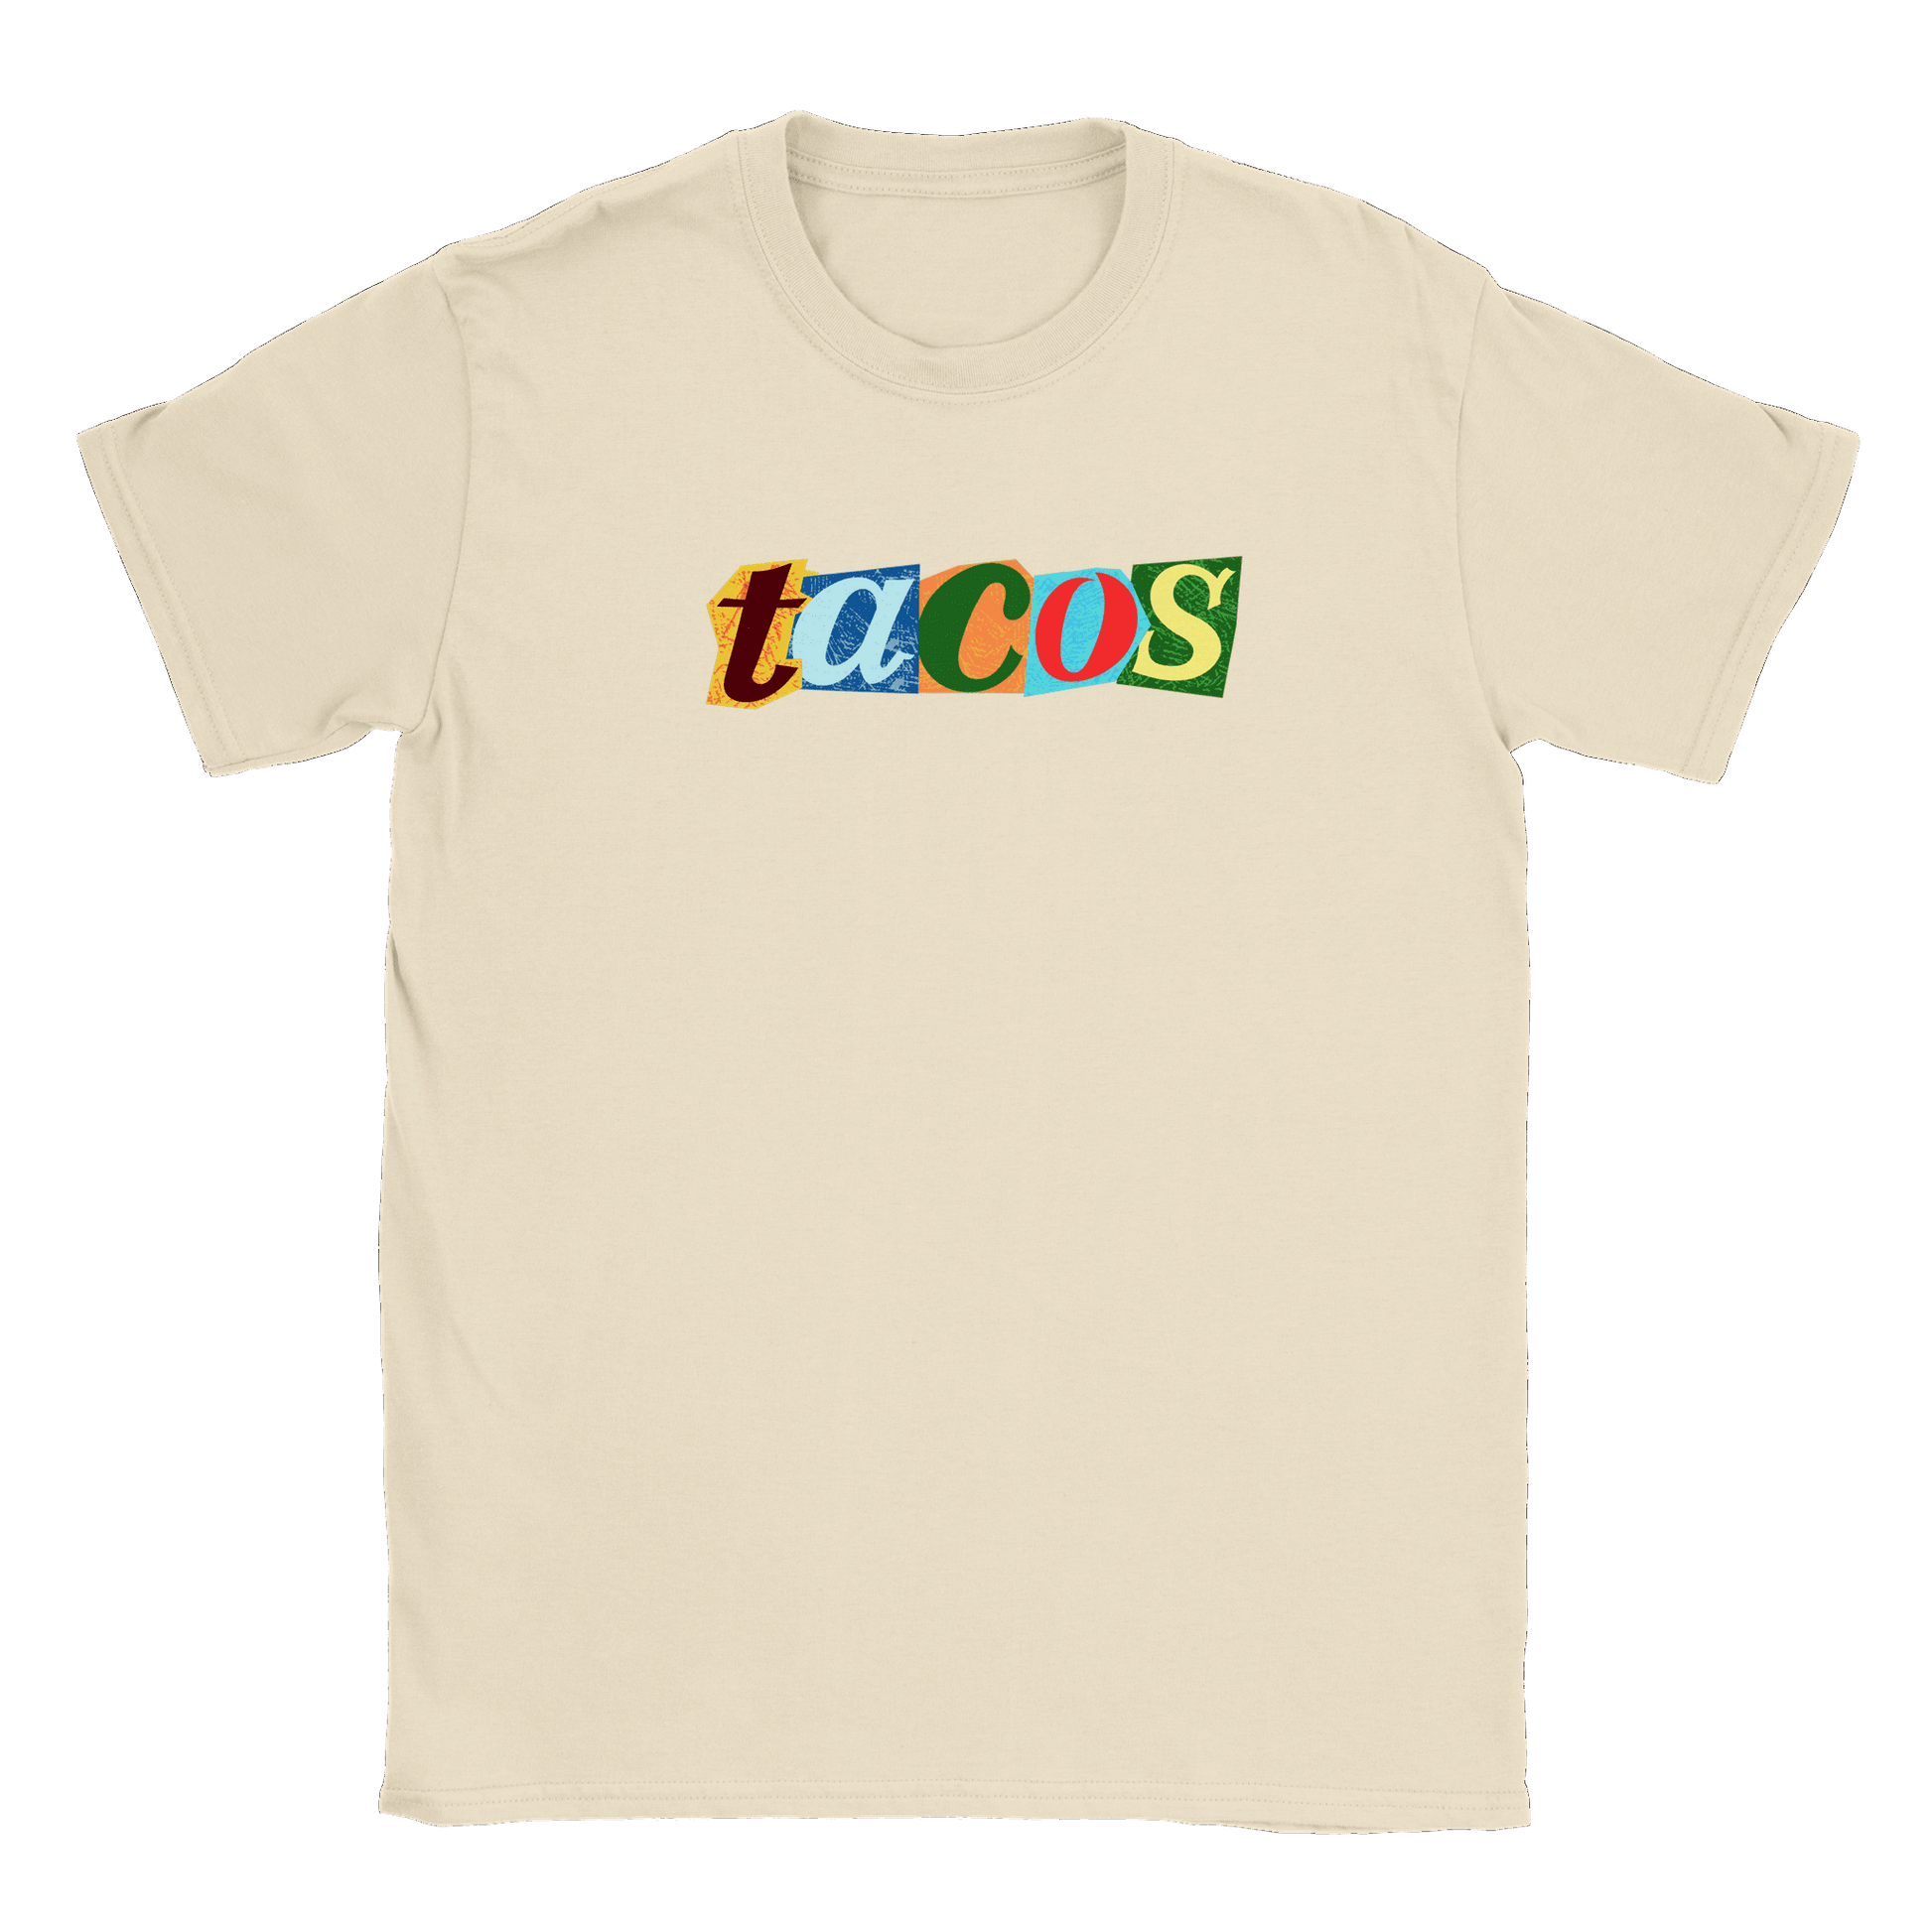 Tacos - T-shirt Natural